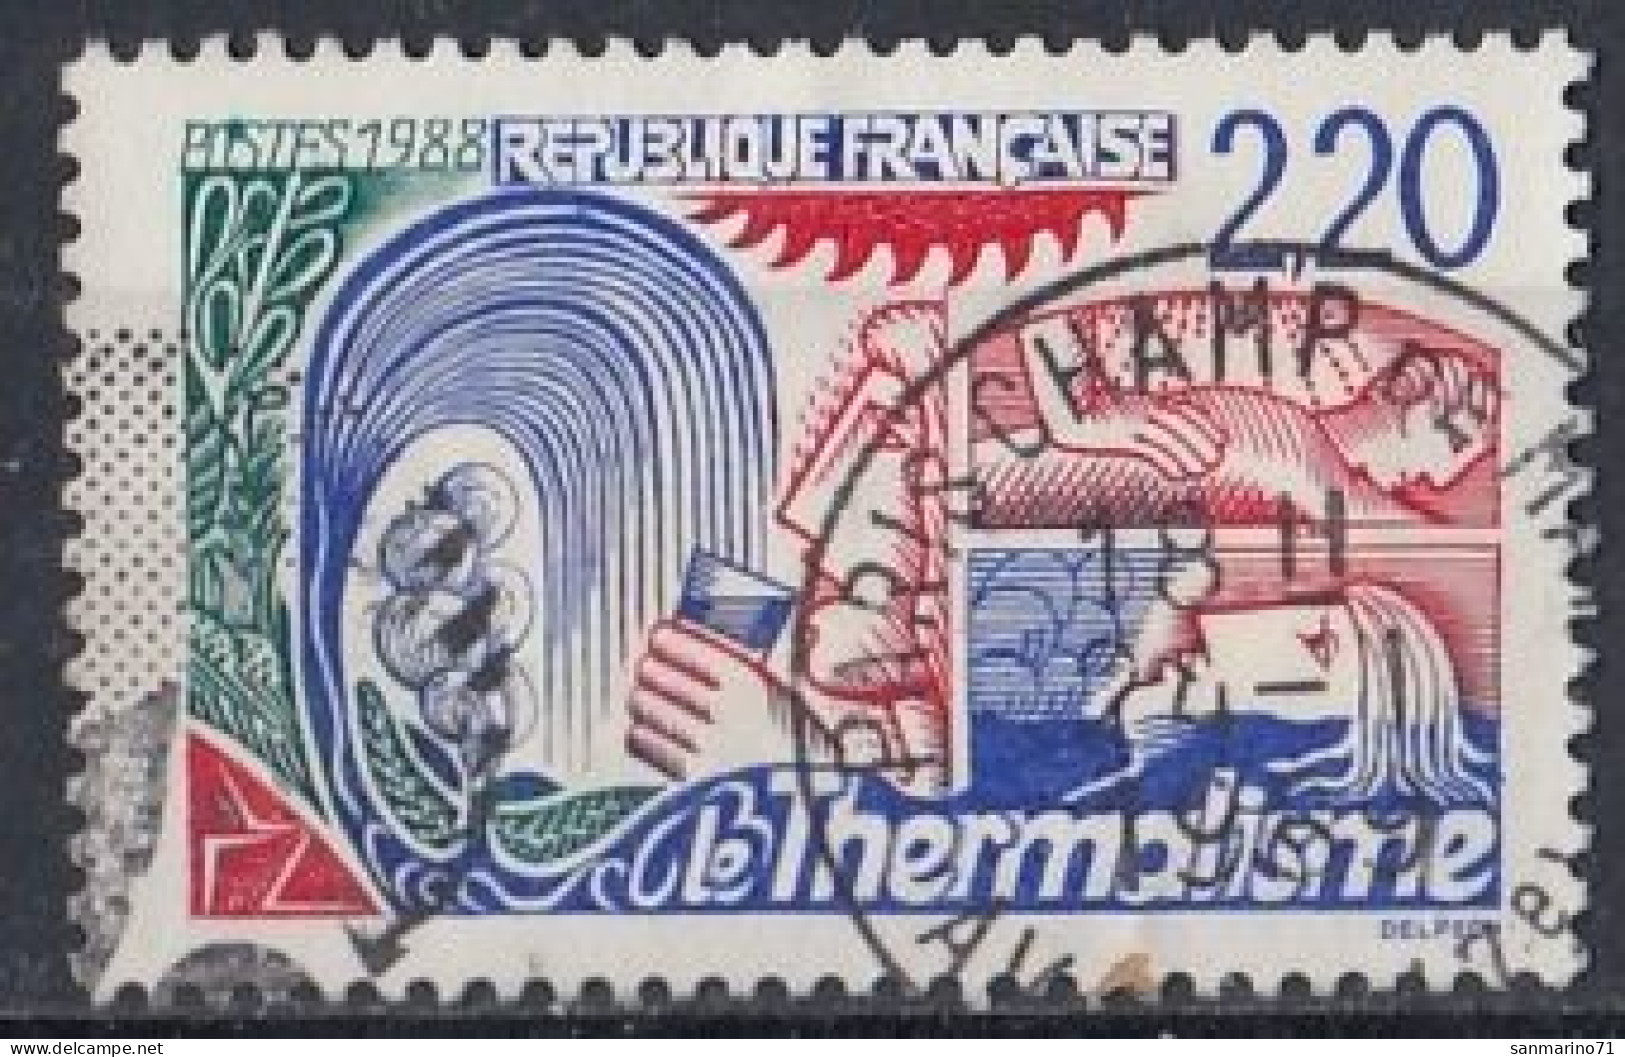 FRANCE 2691,used - Thermalisme